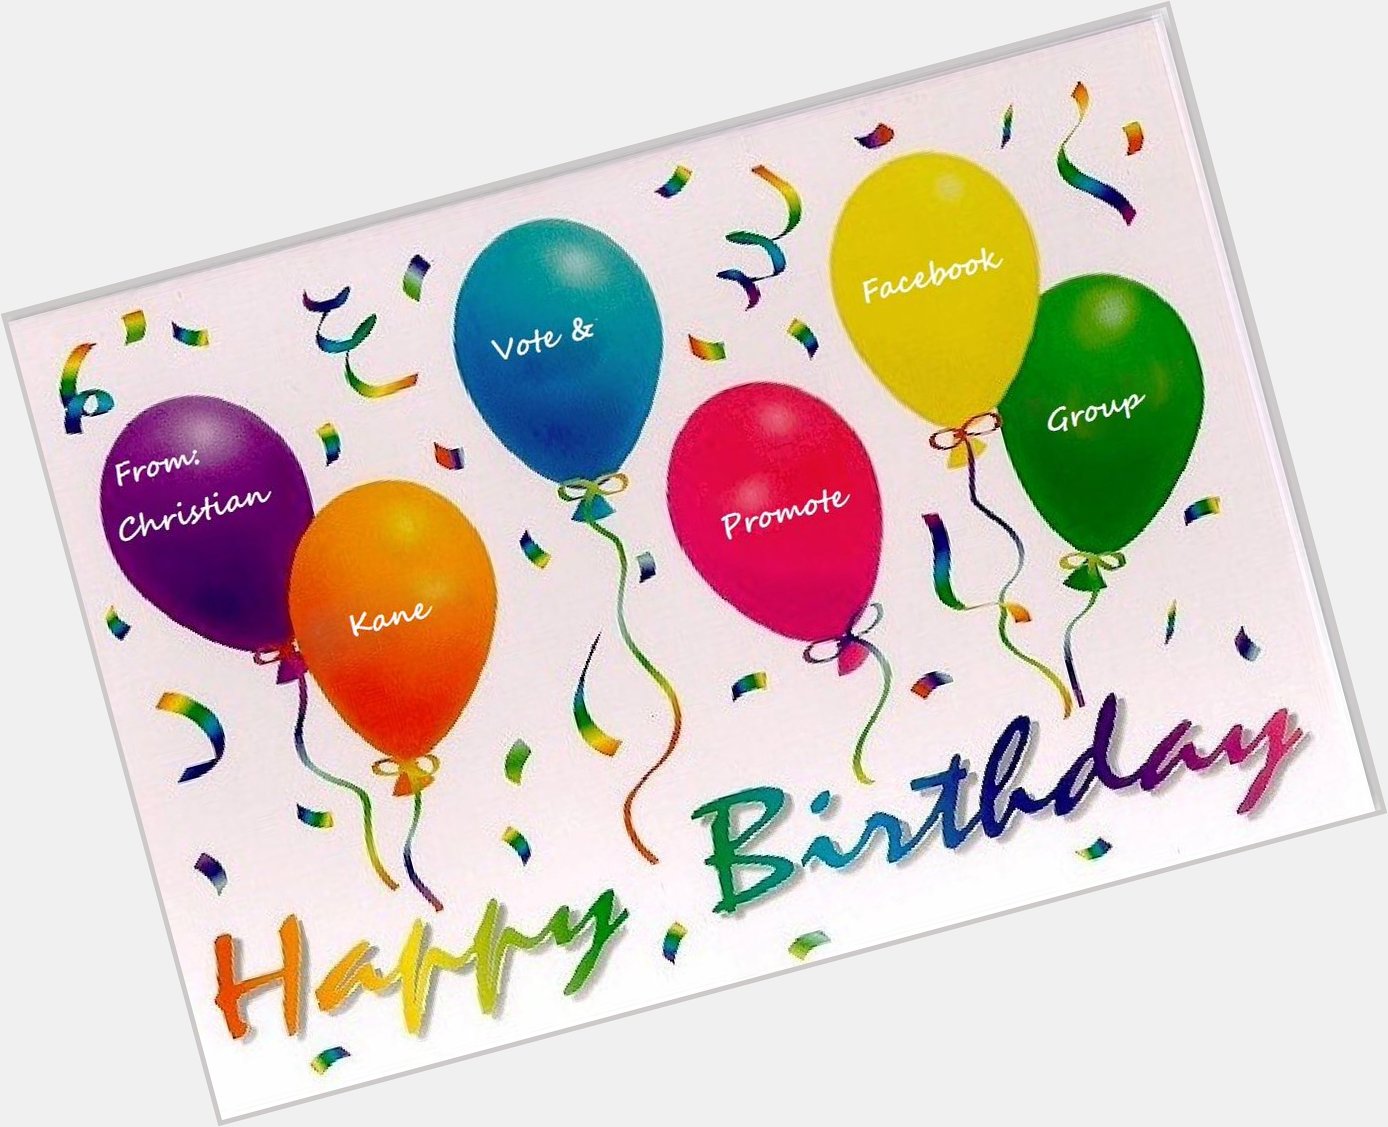   Hope enjoys a Happy Birthday! From Christian Kane Vote & Promote 